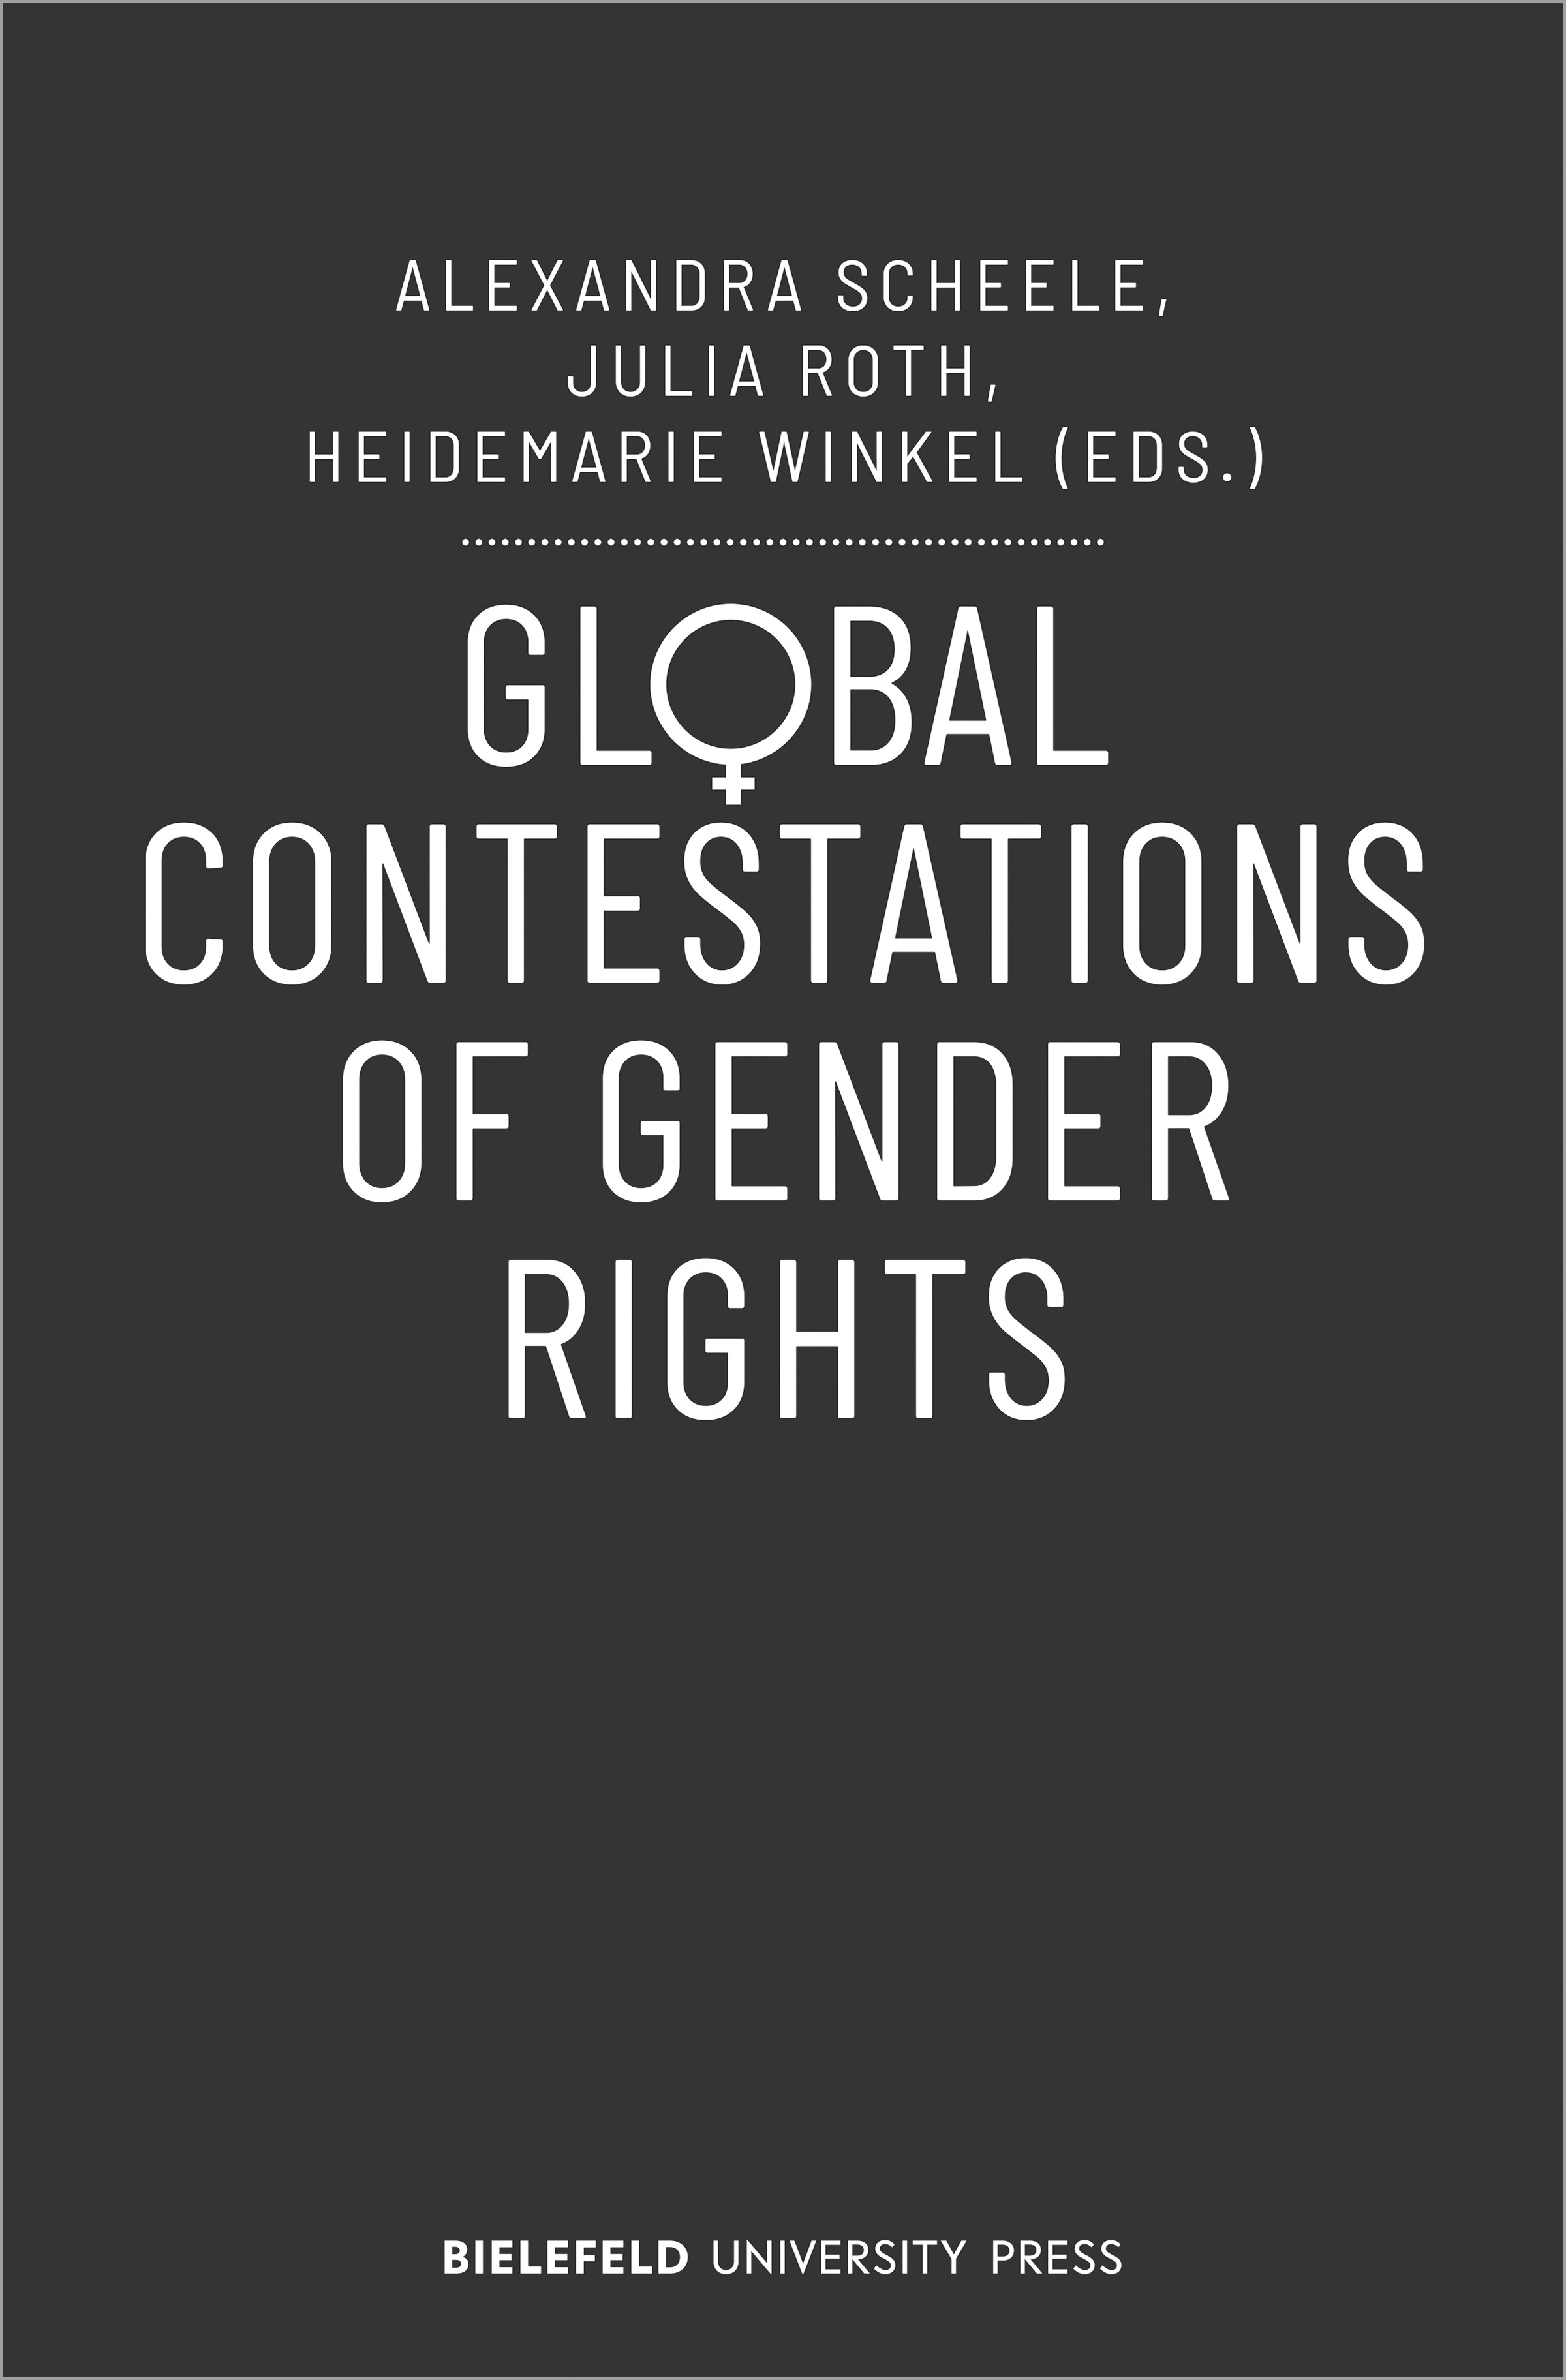 Black book Cover with white lettering: Alexandra Scheele, Julia Roth, Heidemarie Winkel (Eds.) Global Contestations of Gender Rights. Bielefeld University Press